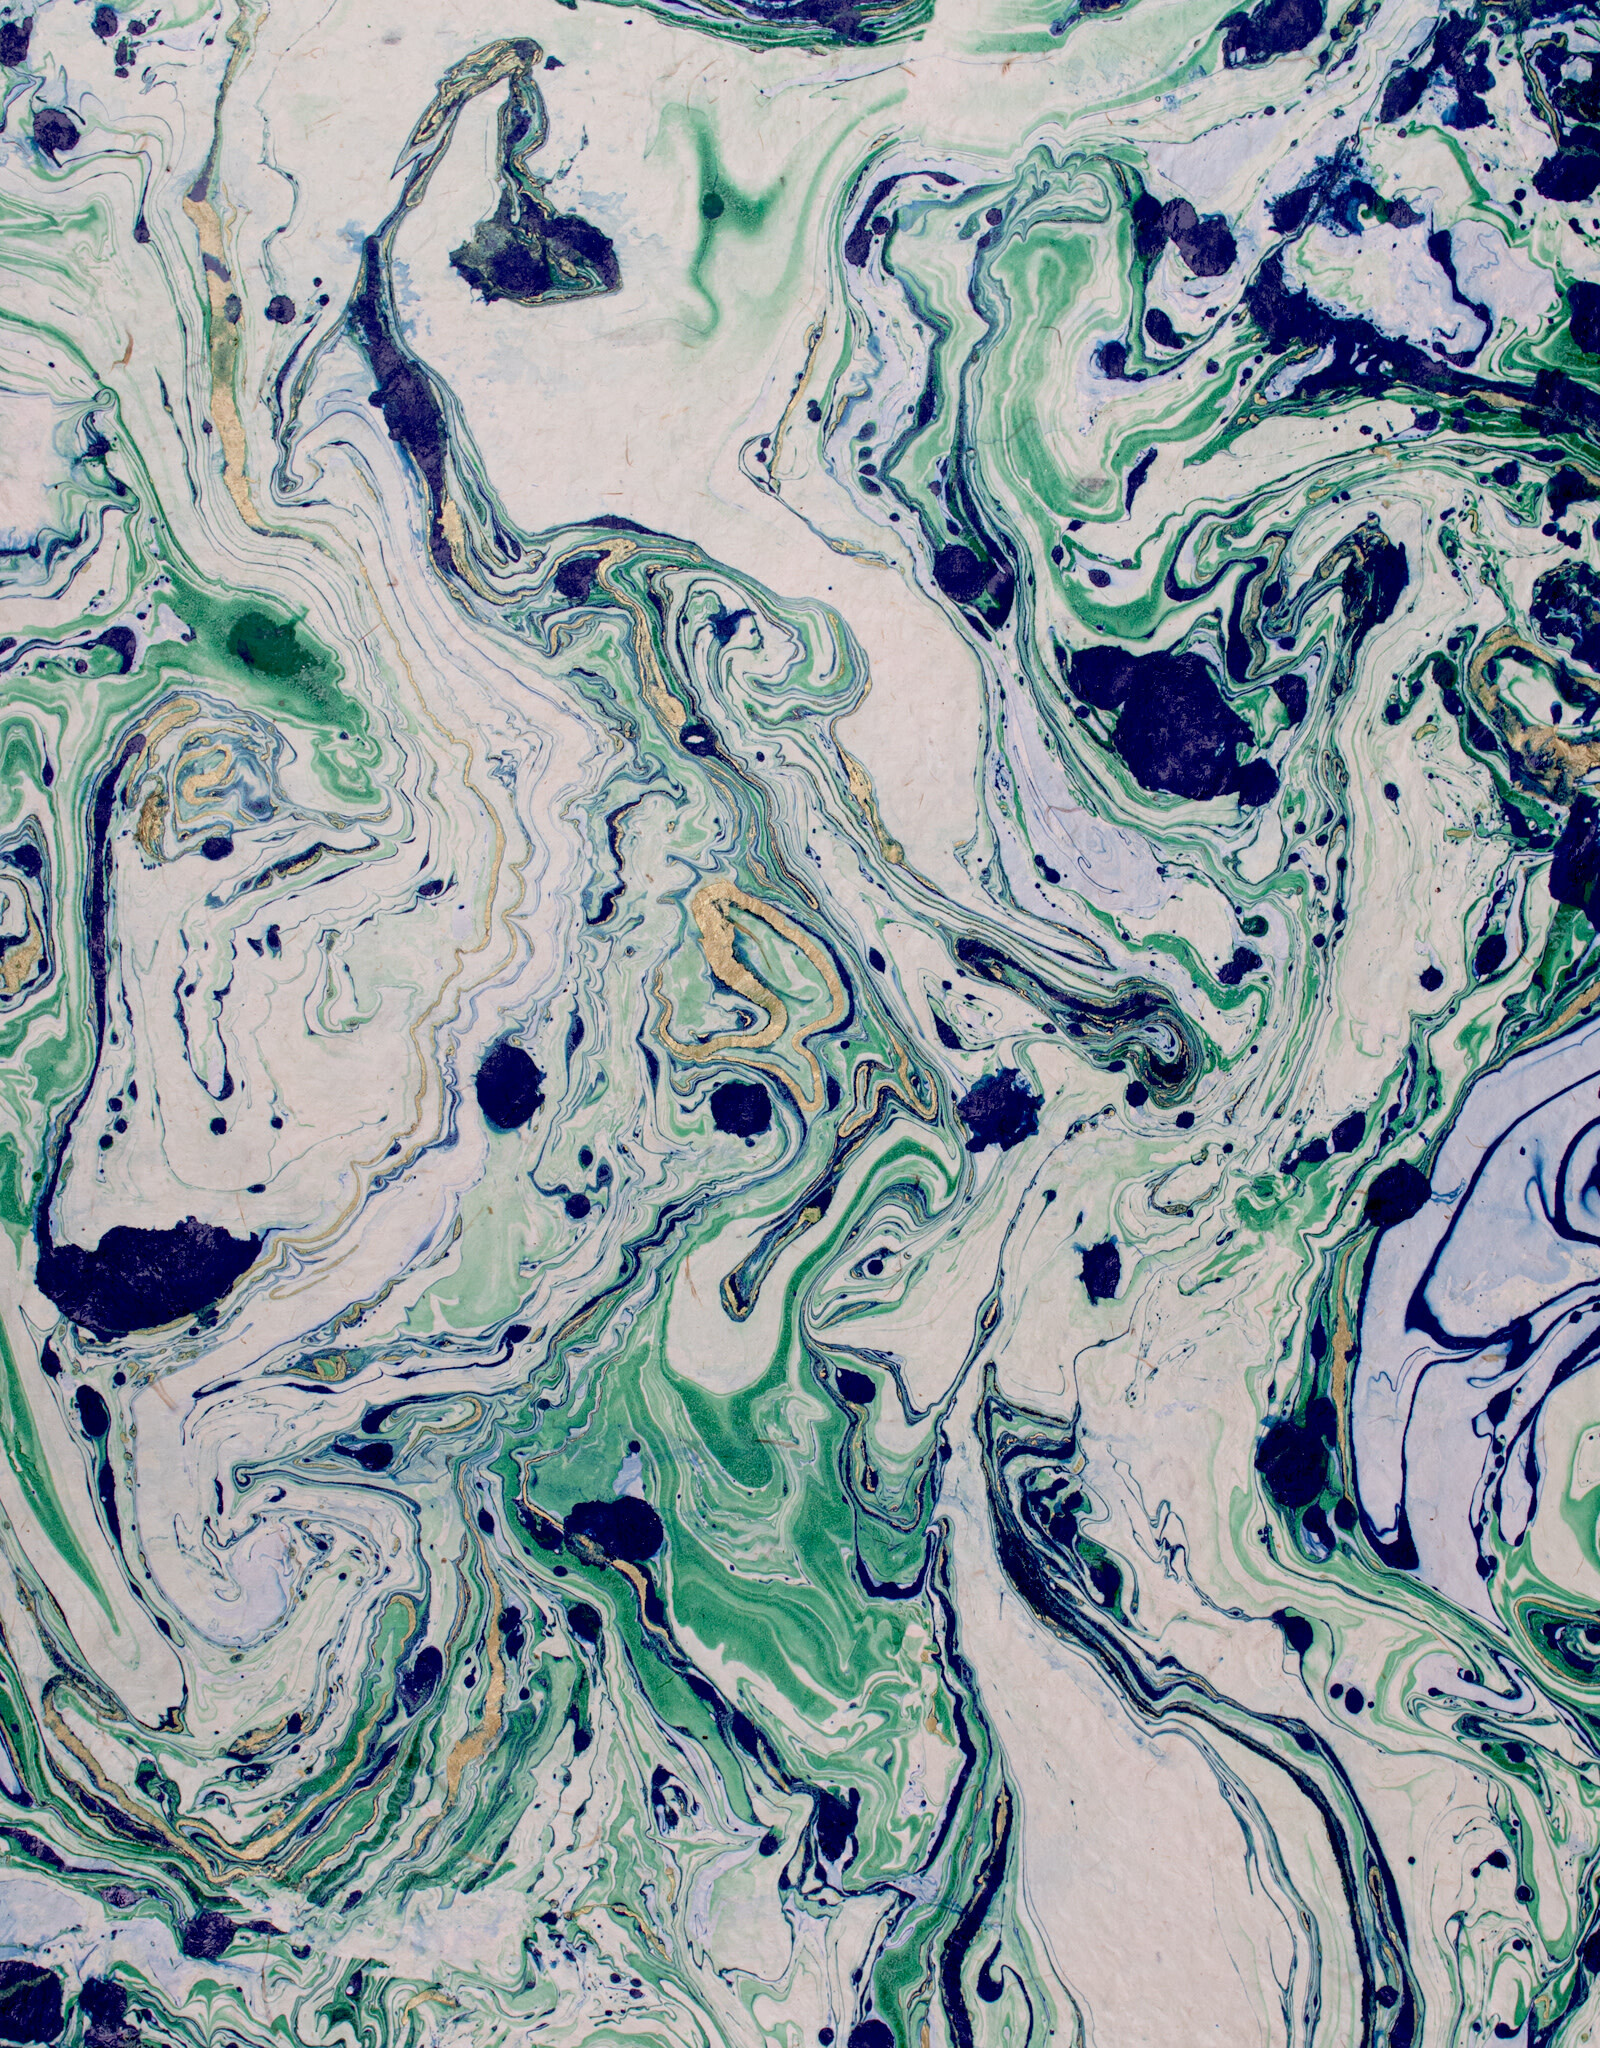 AITOH Aitoh Lokta Marble, Green/Blue/Gold, 19.5" x 29.5"